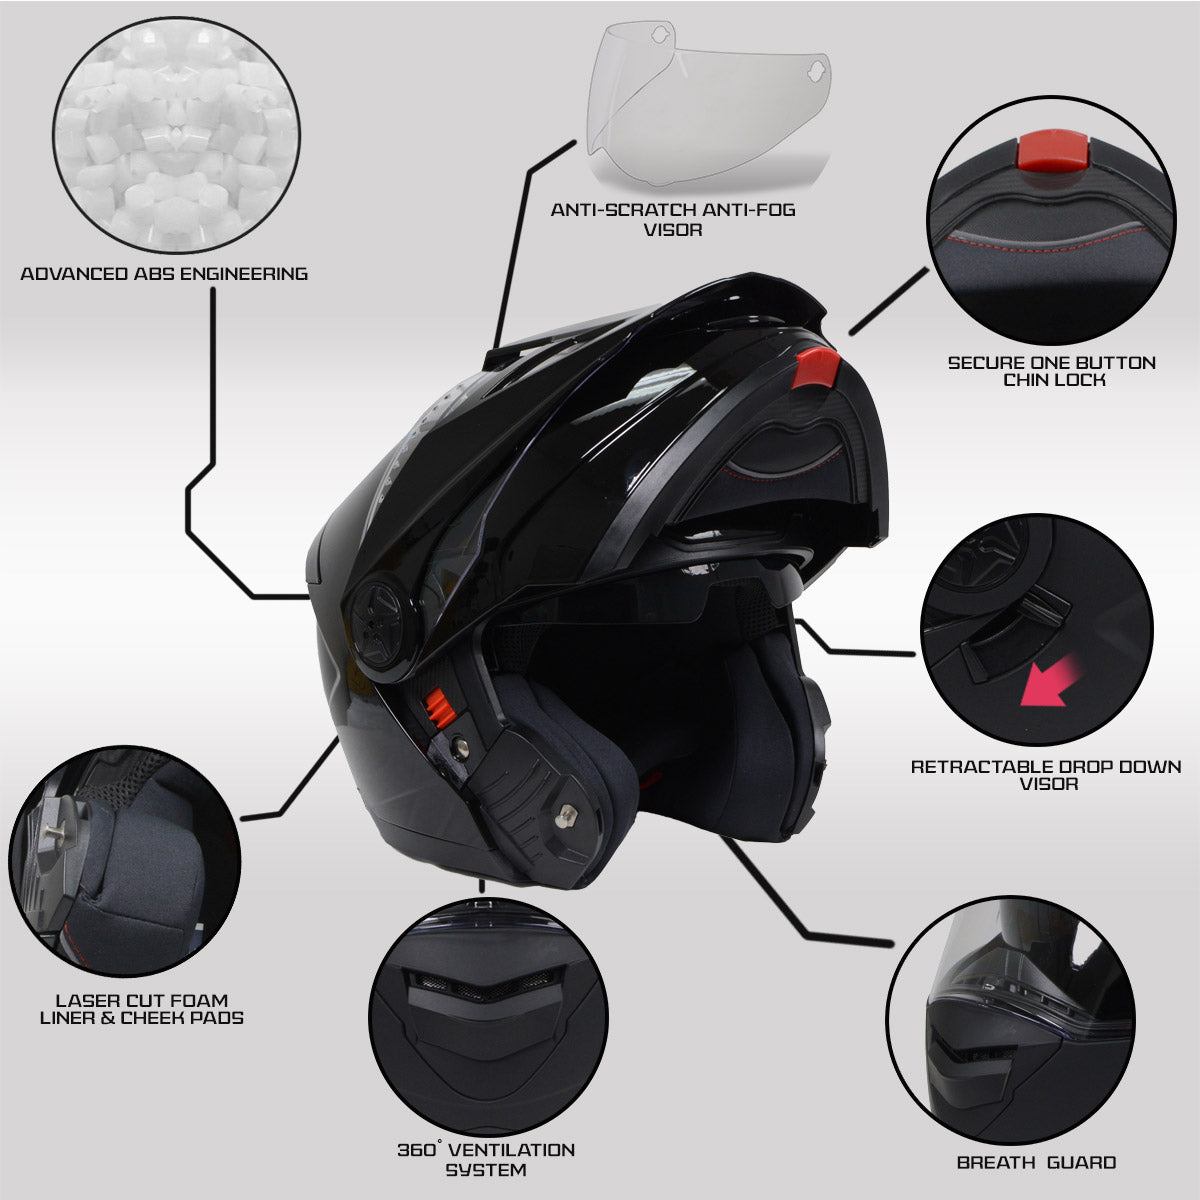 Milwaukee Helmets MPH9821DOT Gloss Black 'Ominous' Dual Sport Advanced Motorcycle Modular Helmet for Men and Women Biker